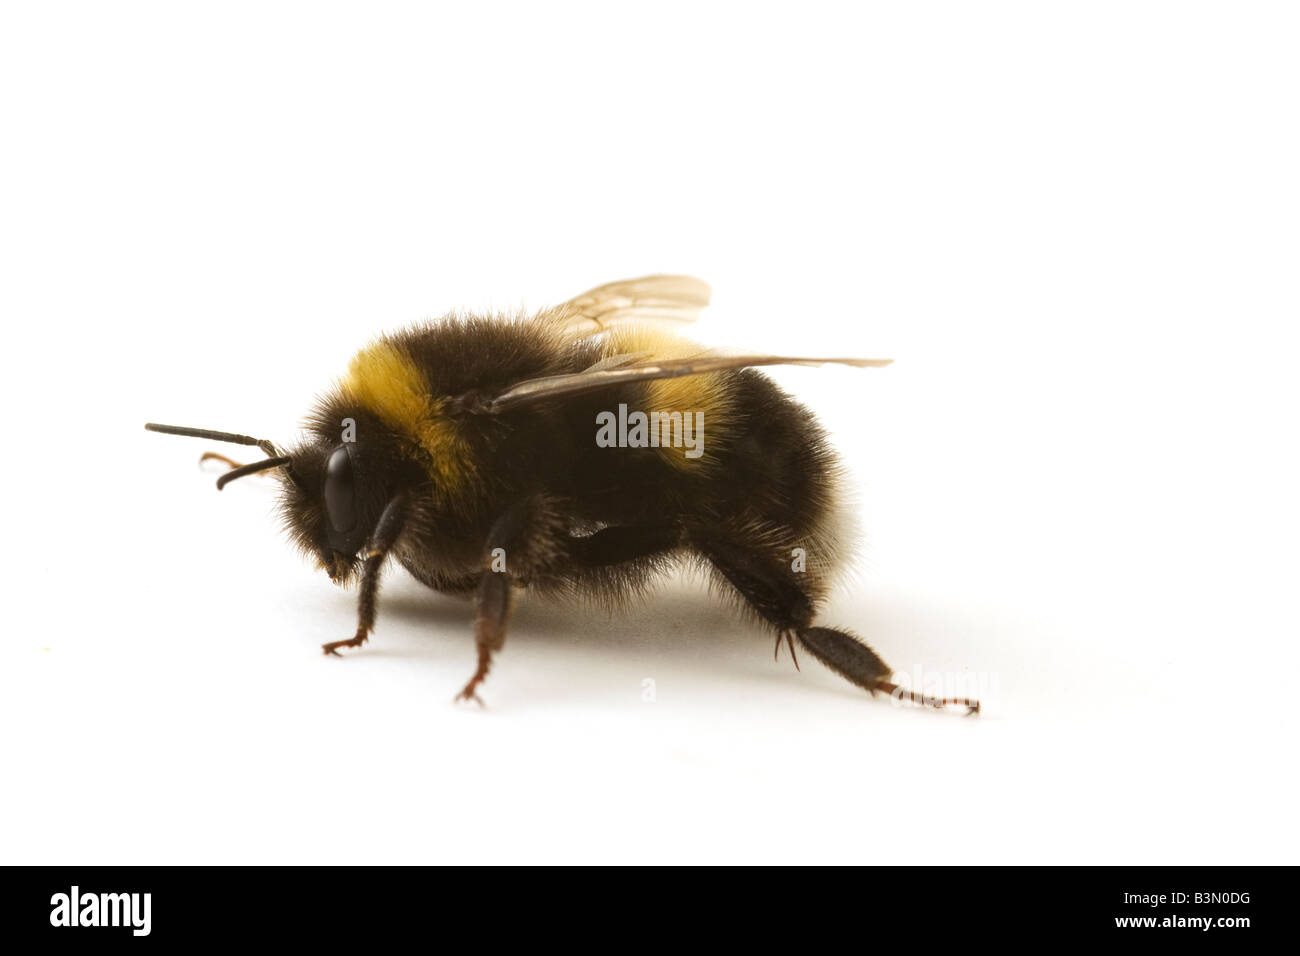 Foto de estudio de un abejorro, Bombus terrestris Foto de stock